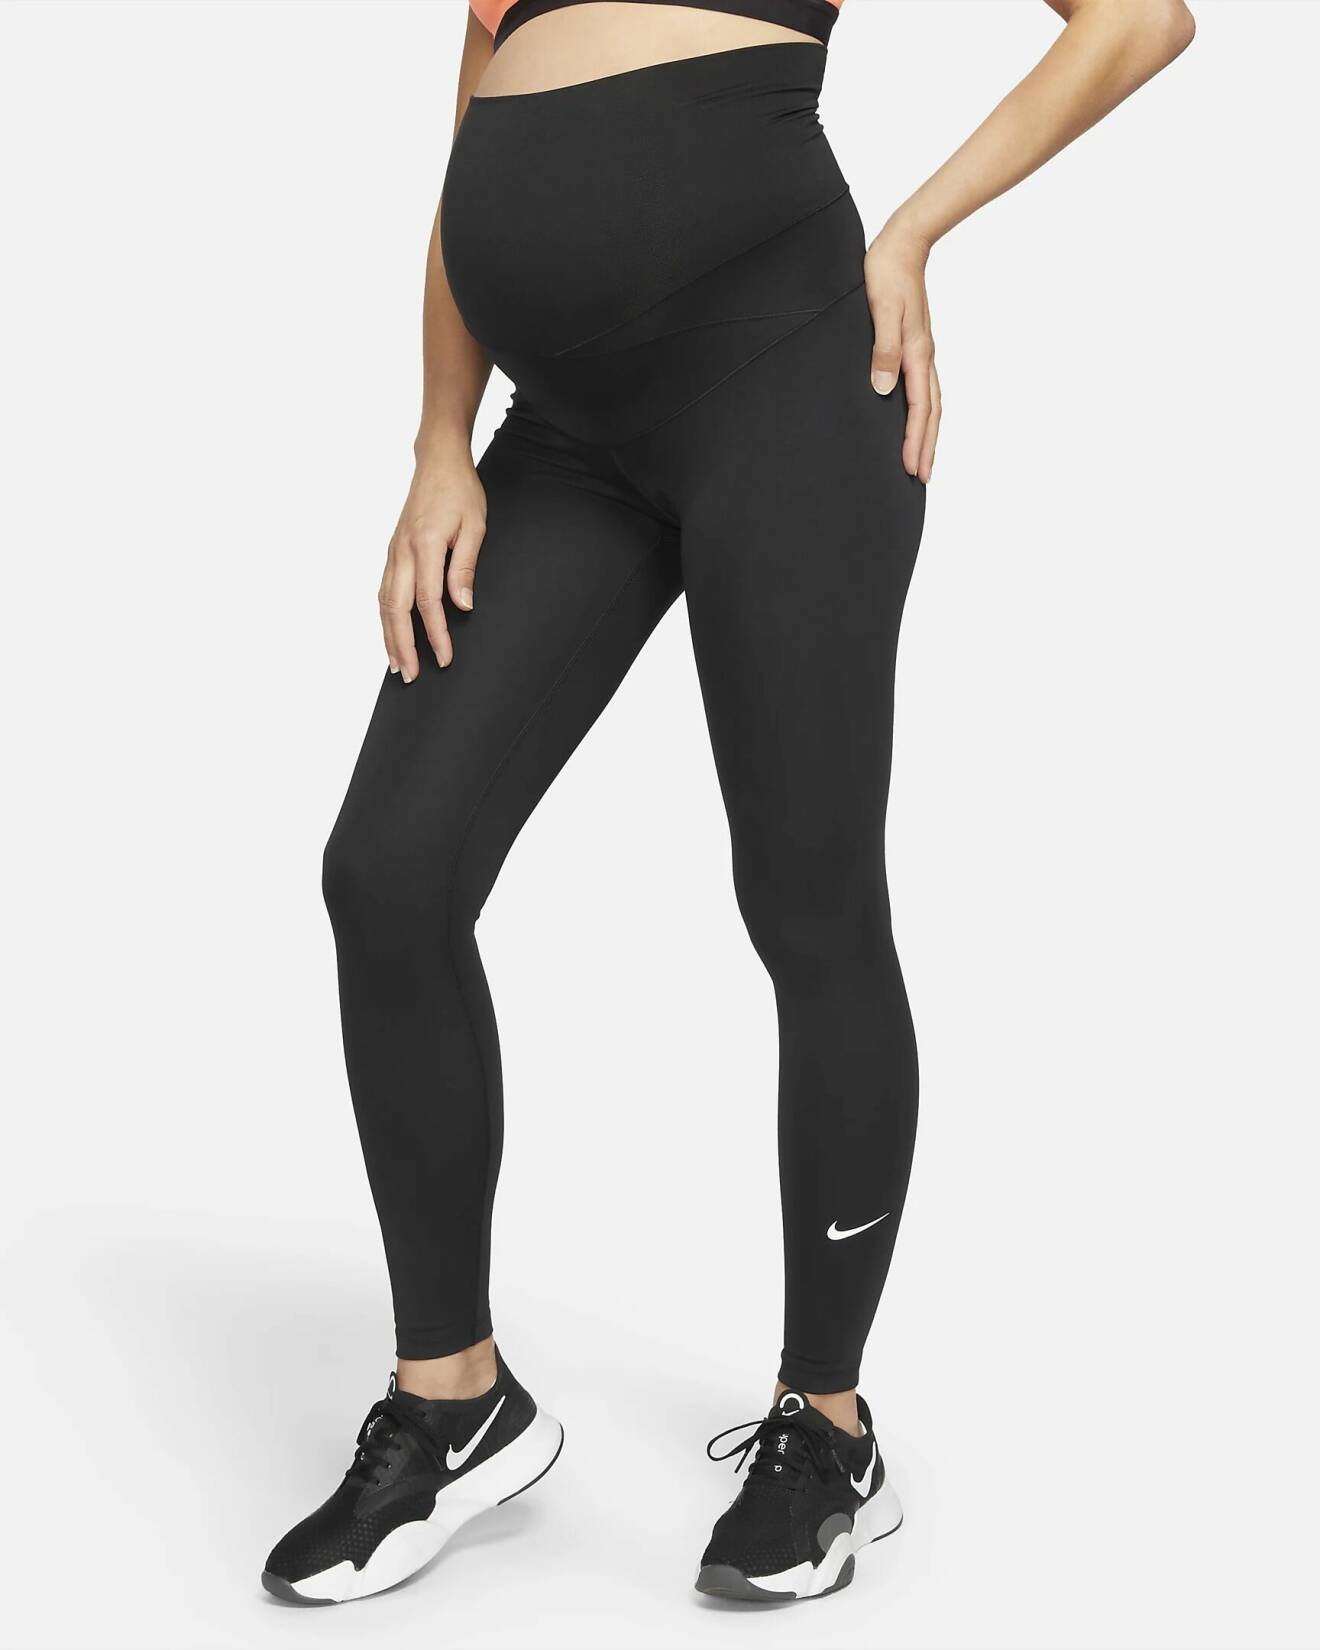 Träningstights Nike materinity, gravidtights Nike